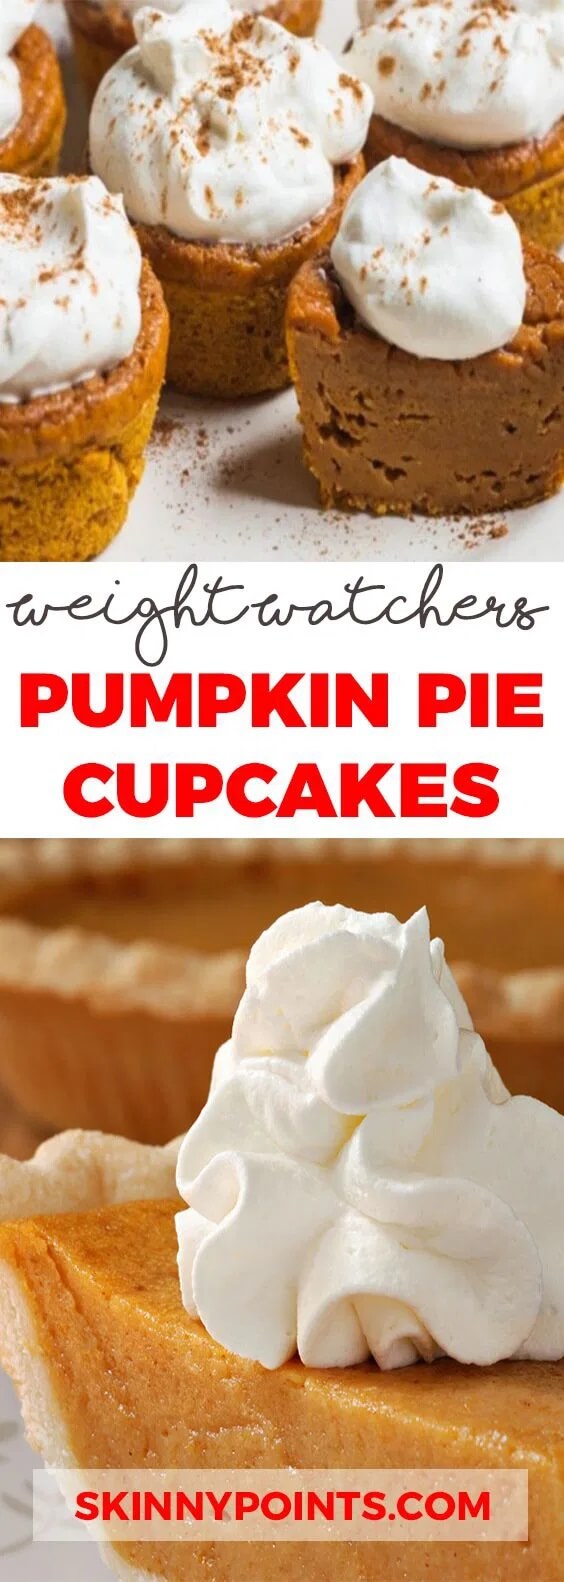 WW Pumpkin Pie Cupcakes